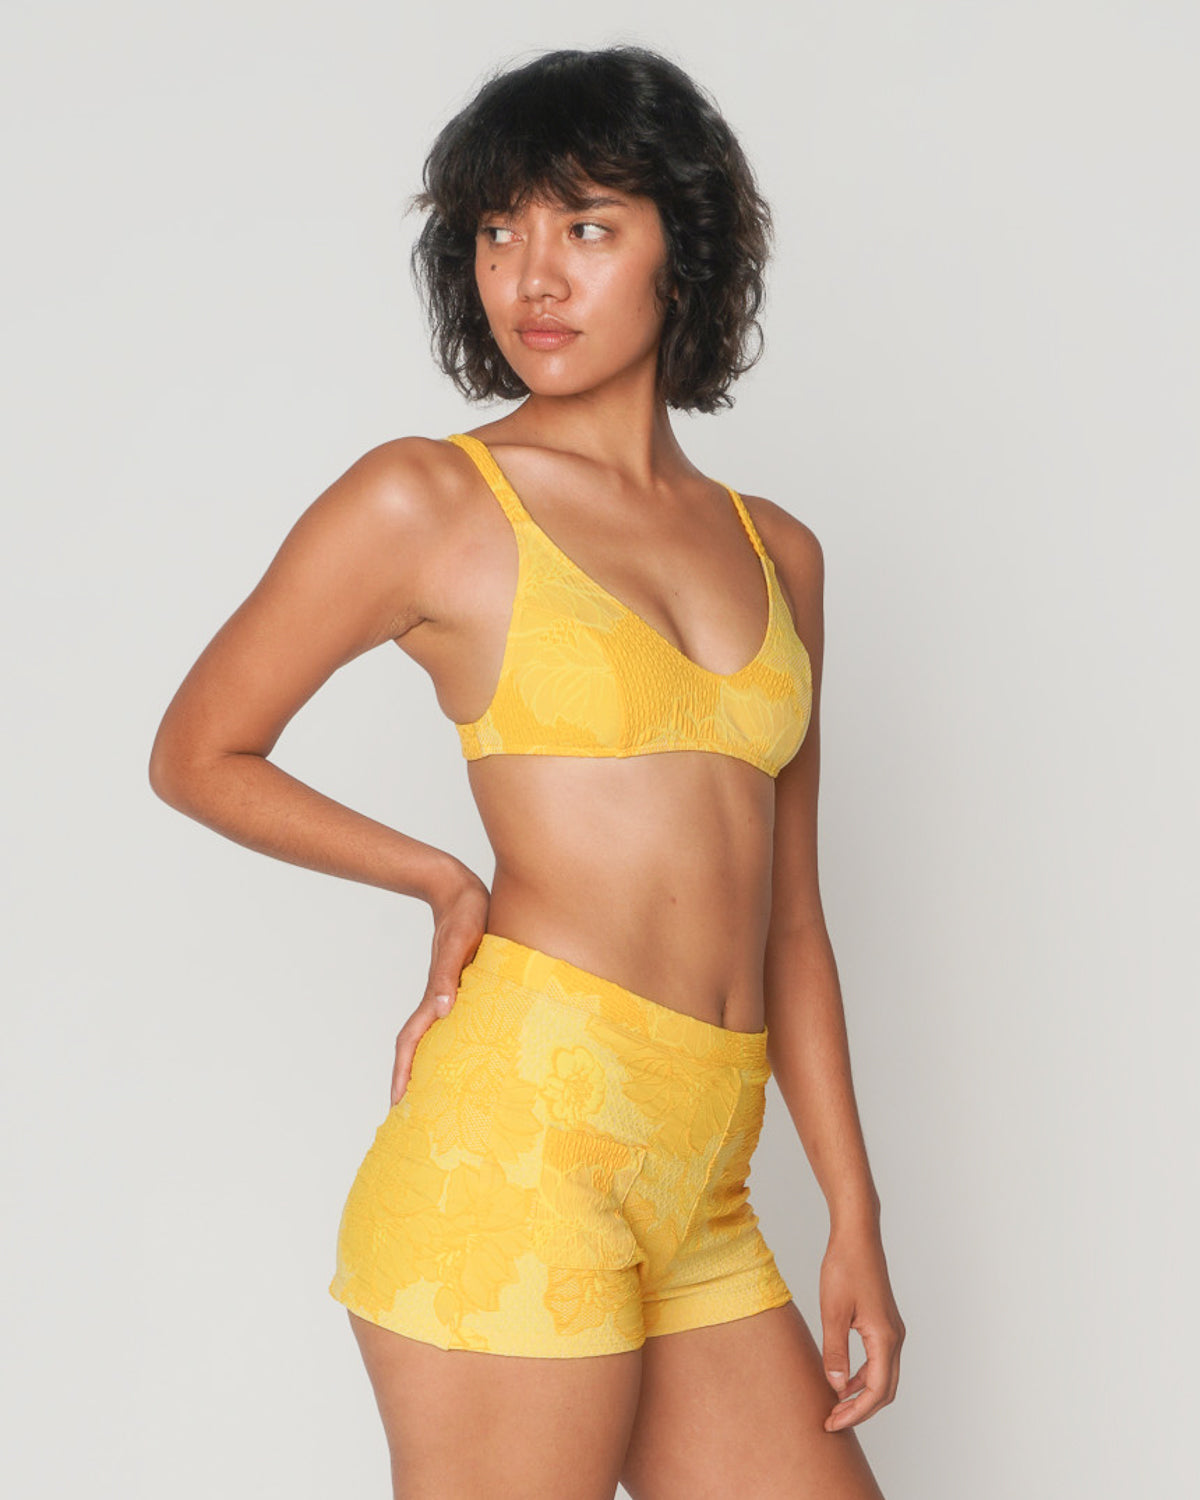 Bobby Nectar Yellow Textured Floral Pattern Bikini Top Swim Suit